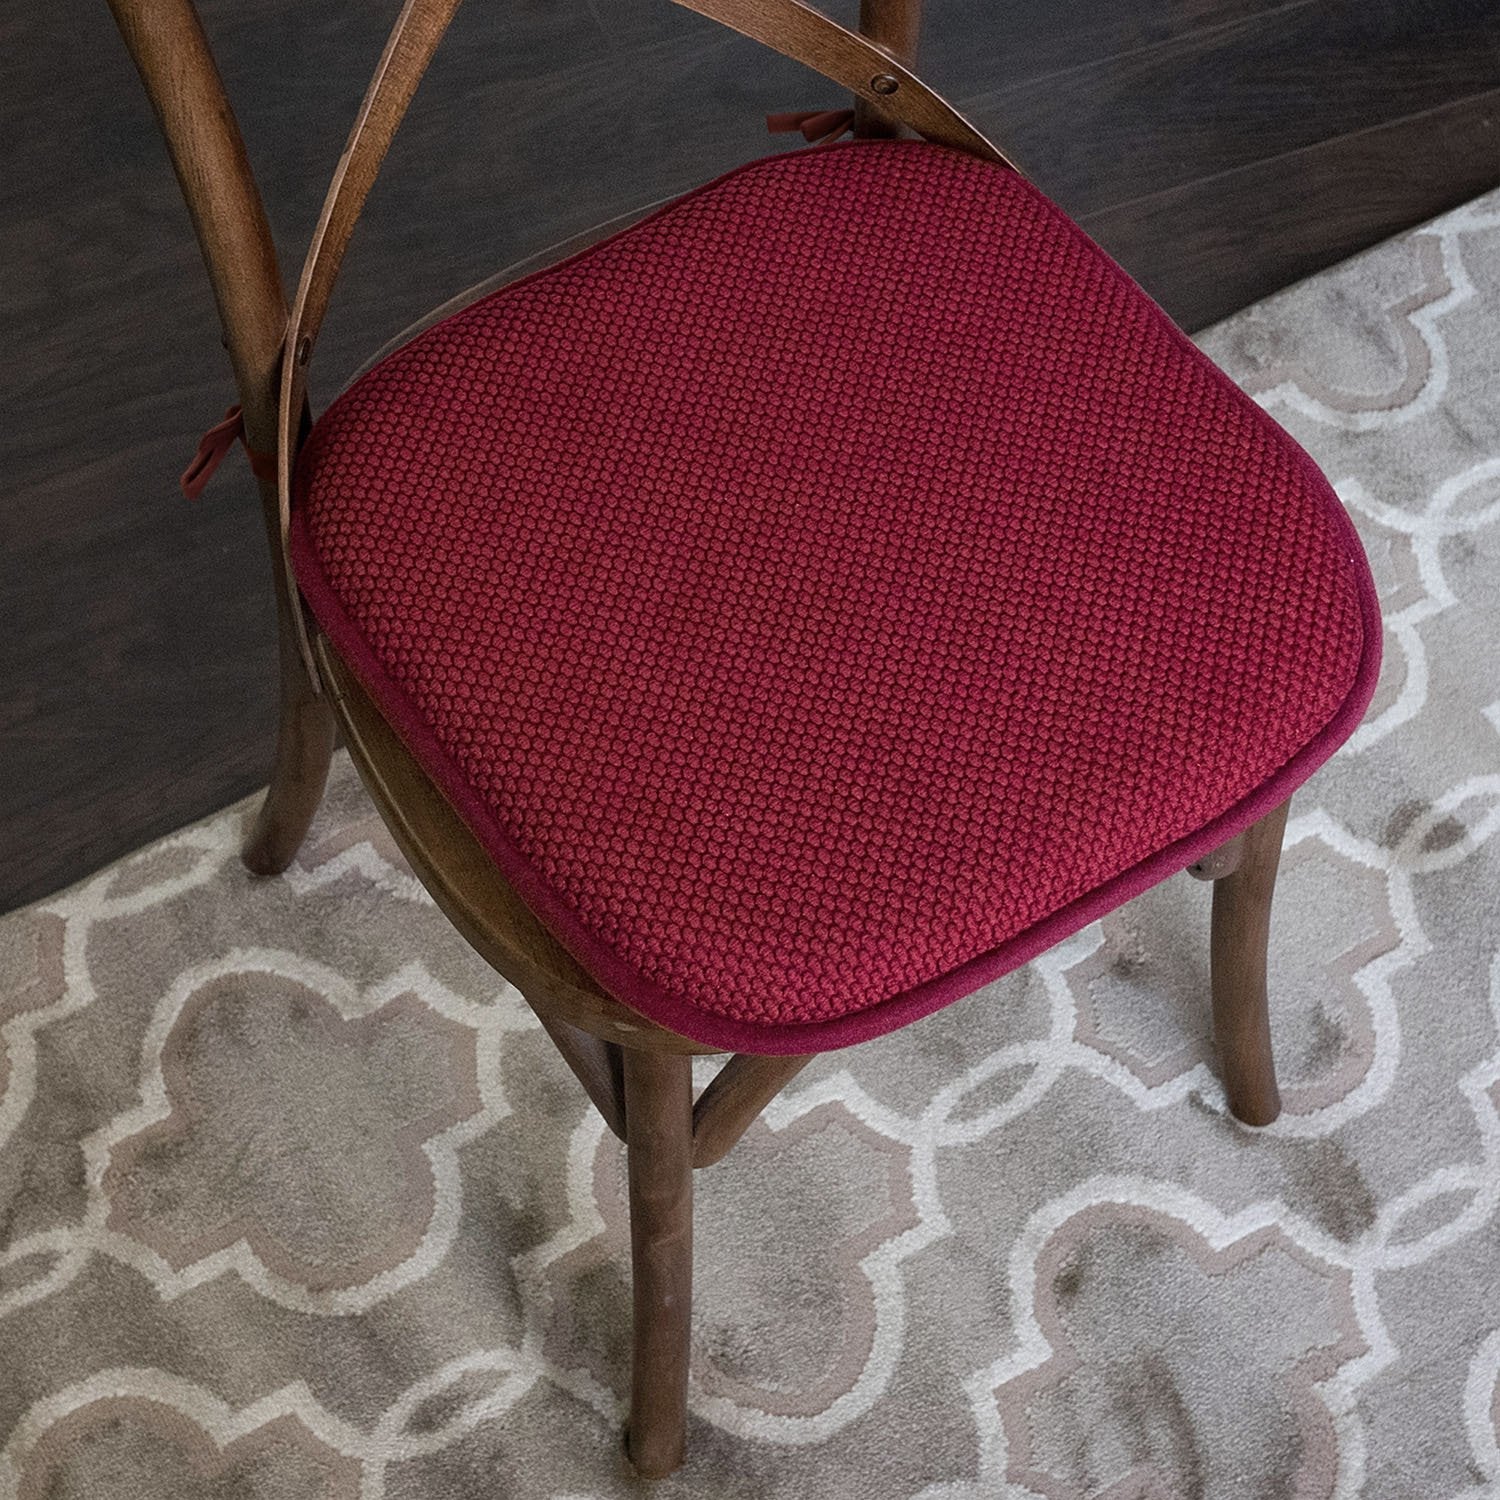 Honeycomb Chair Cushion Set with Ties Burgundy - Chair